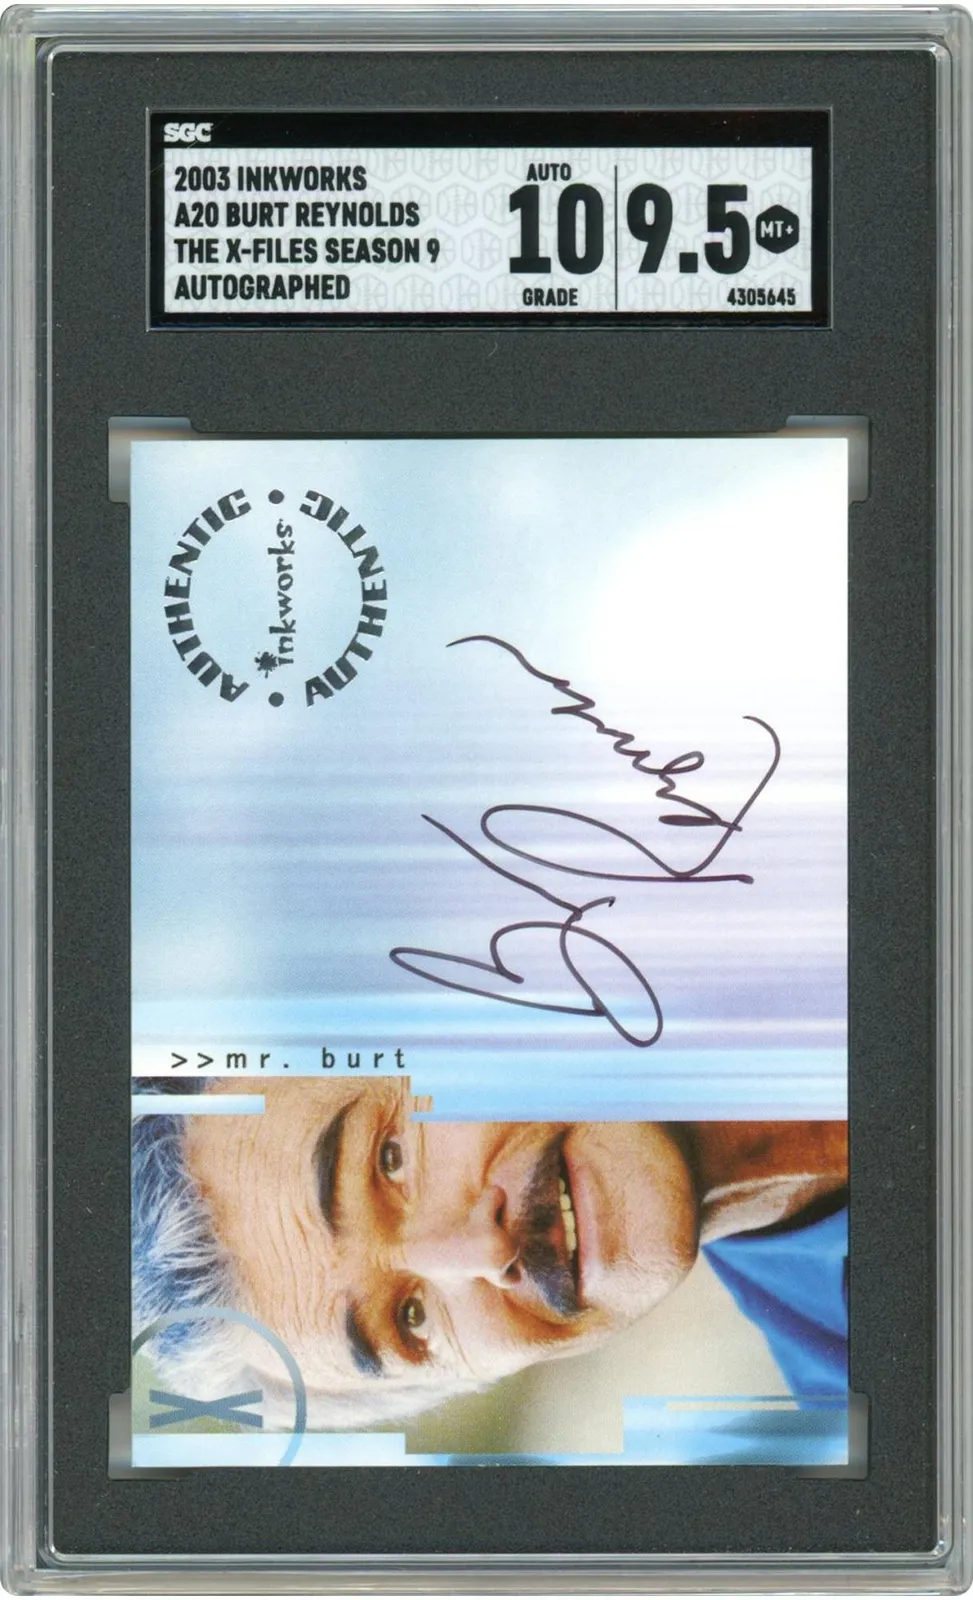 Burt Reynolds Autographed 2003 Inkworks #A20 SGC Authenticated 9.5 Card